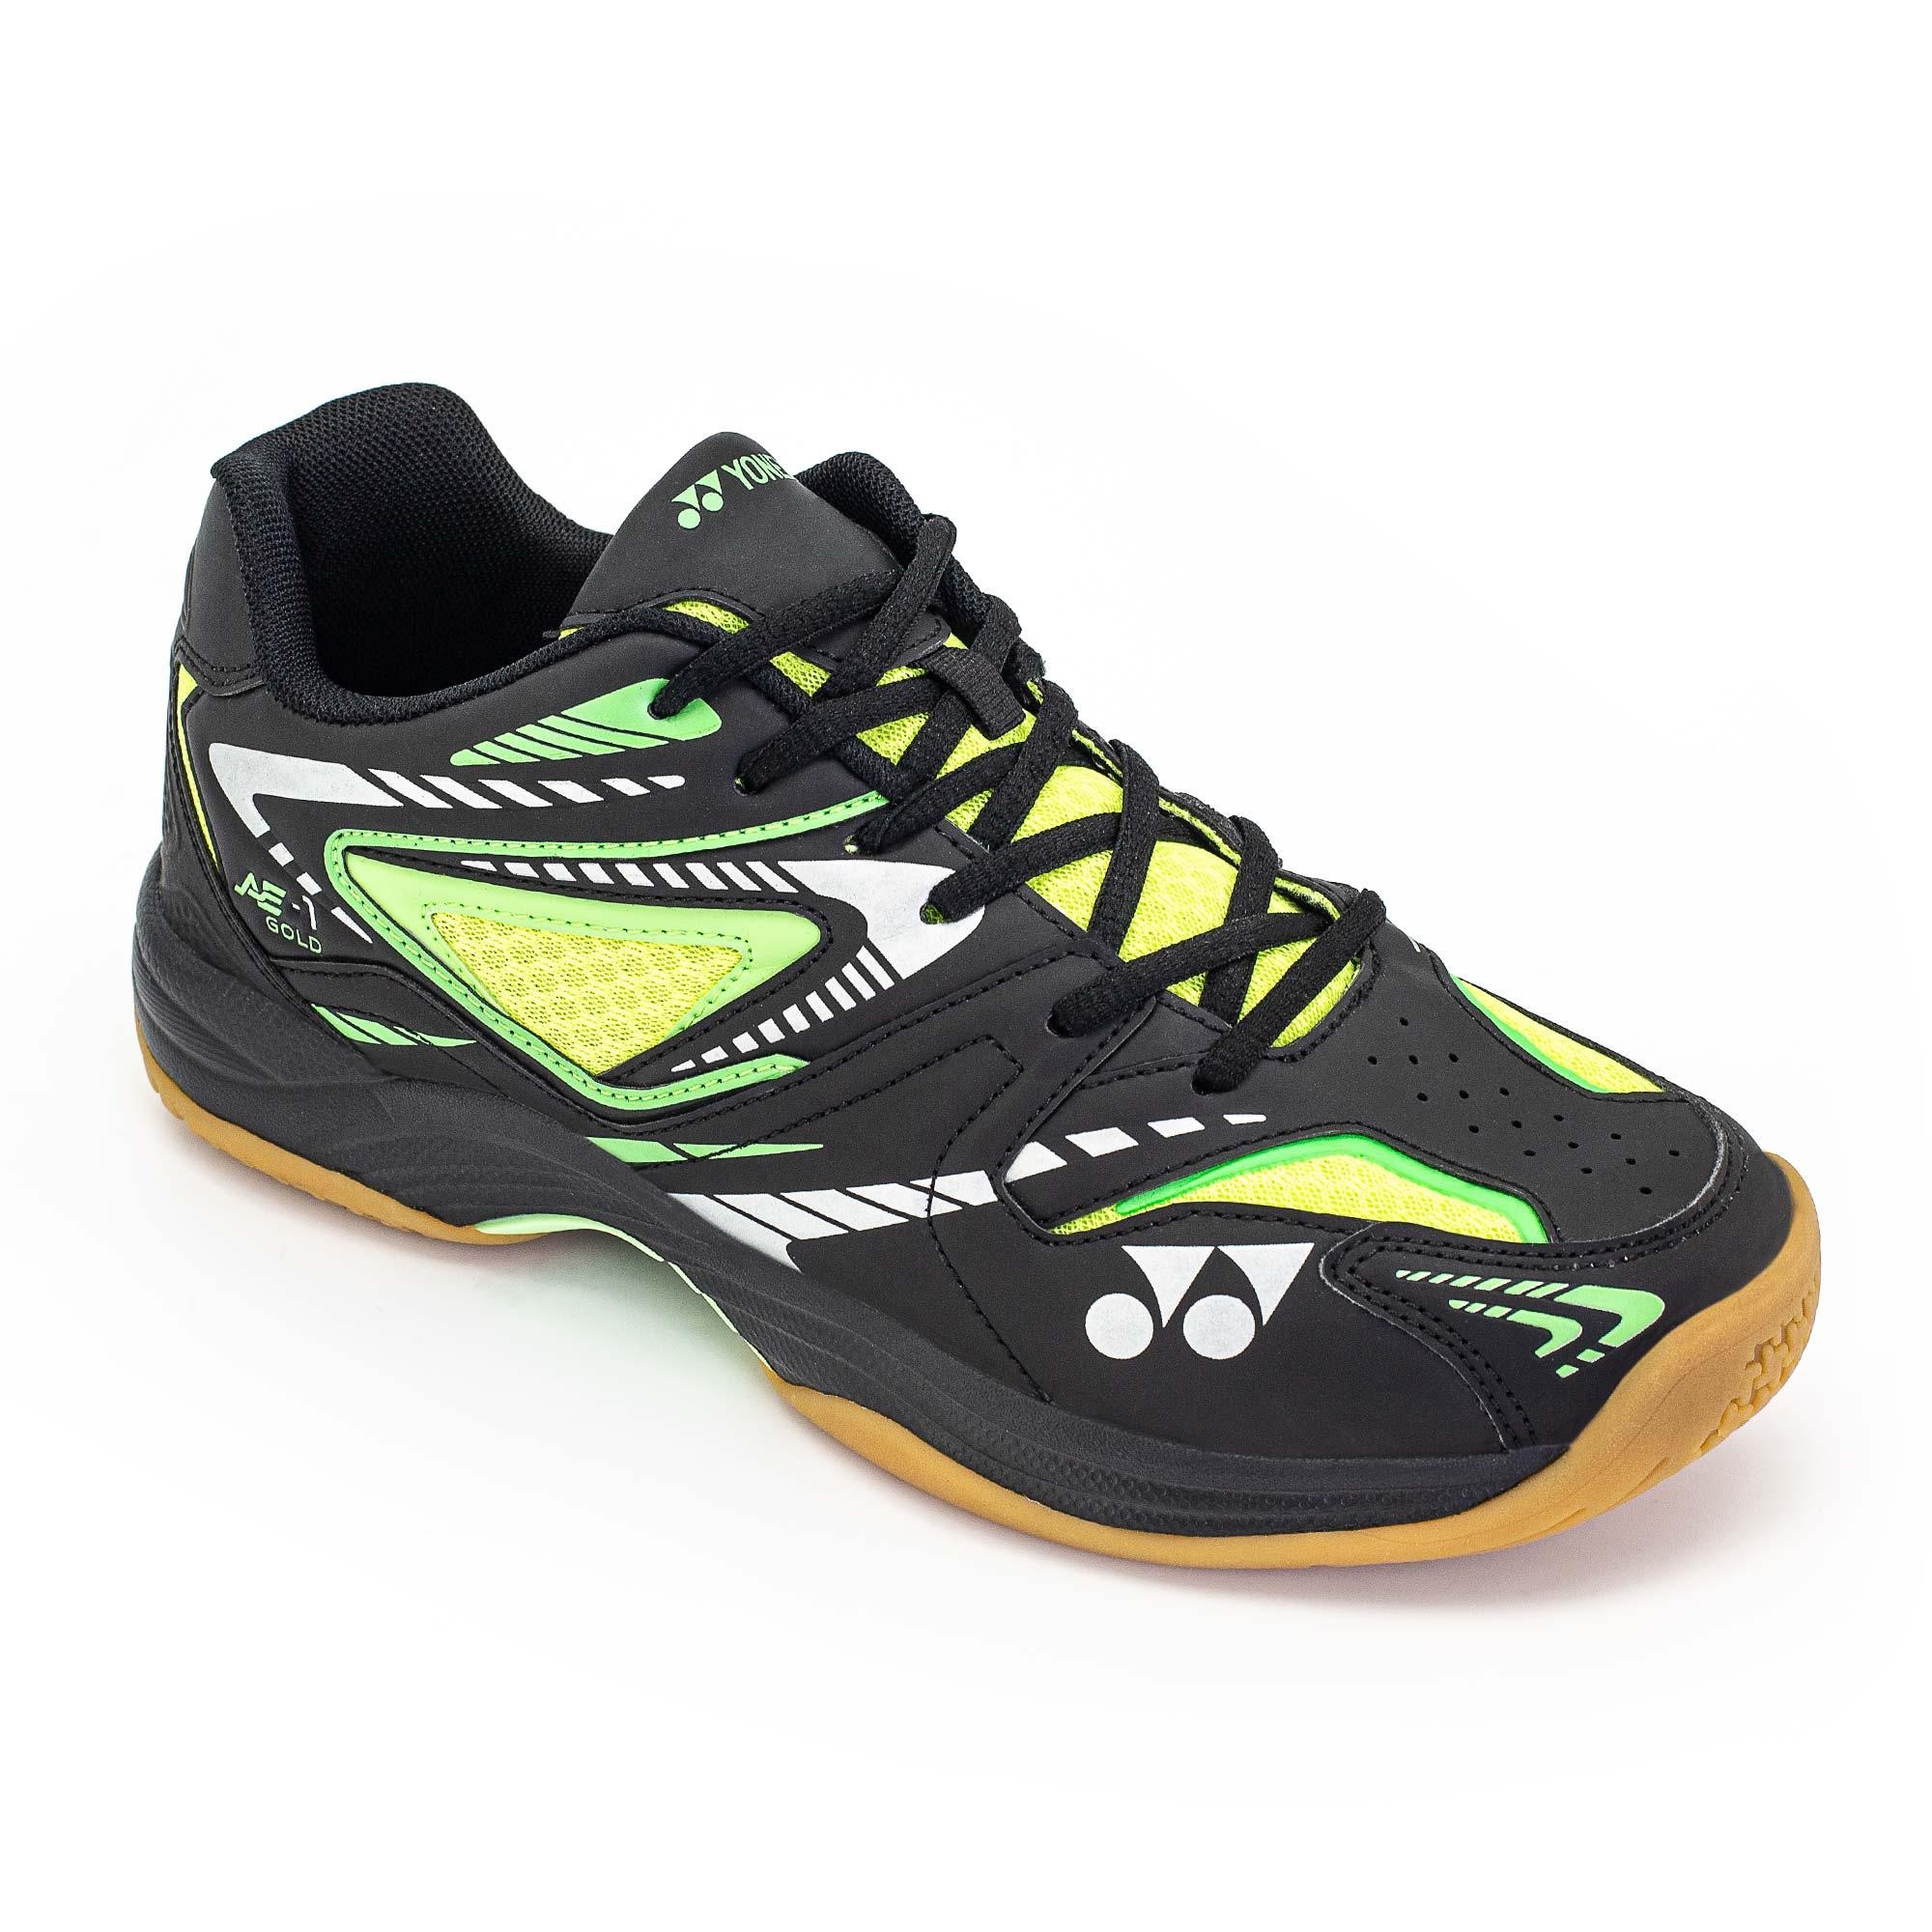 Yonex AE-1GOLD Badminton Shoes